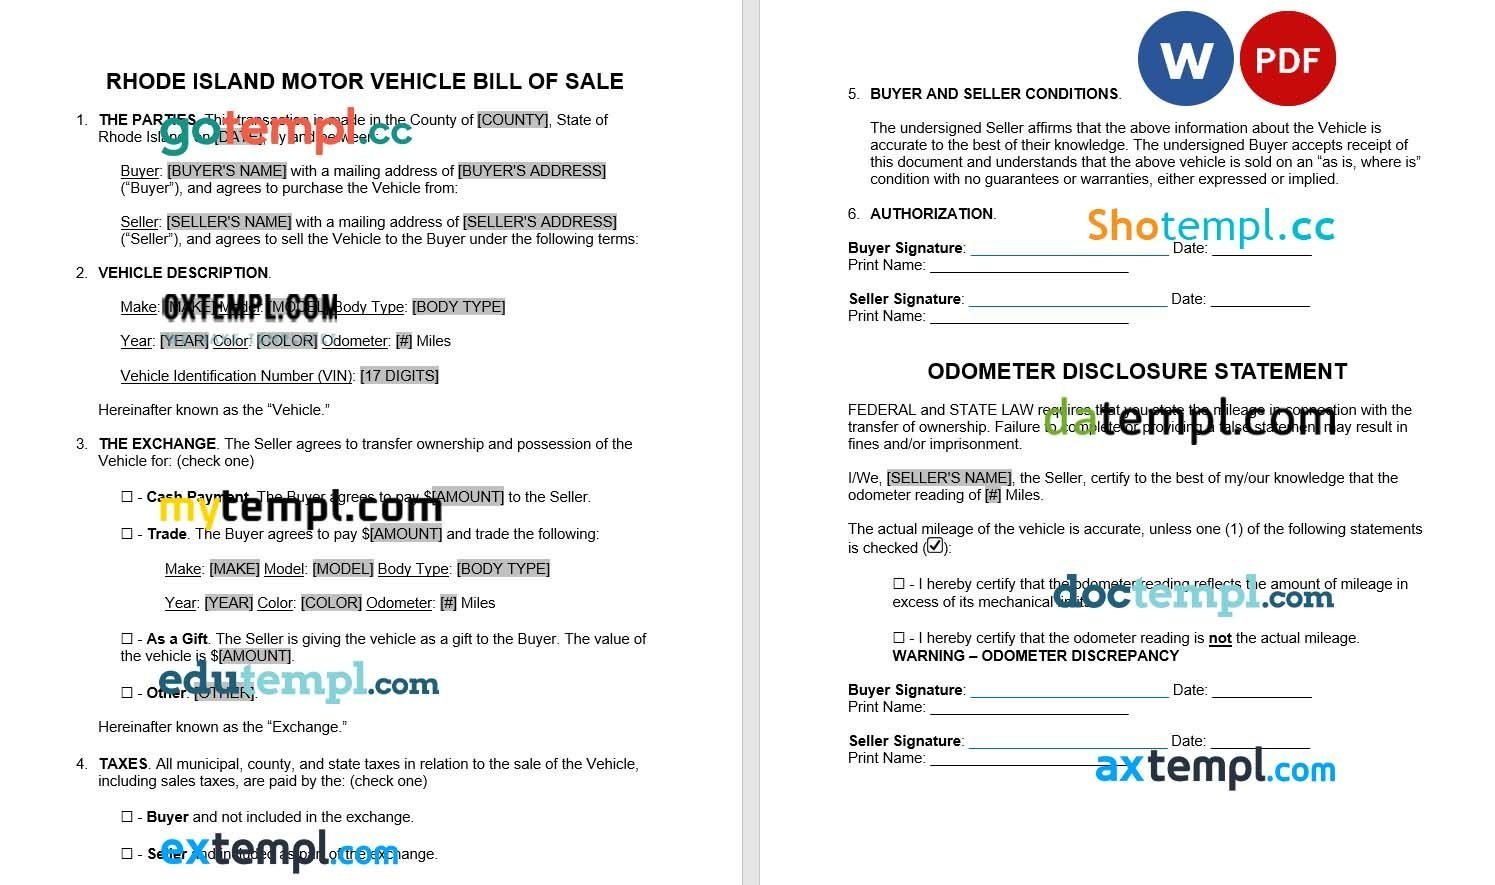 Rhode Island Motor Vehicle Bill of Sale example, fully editable